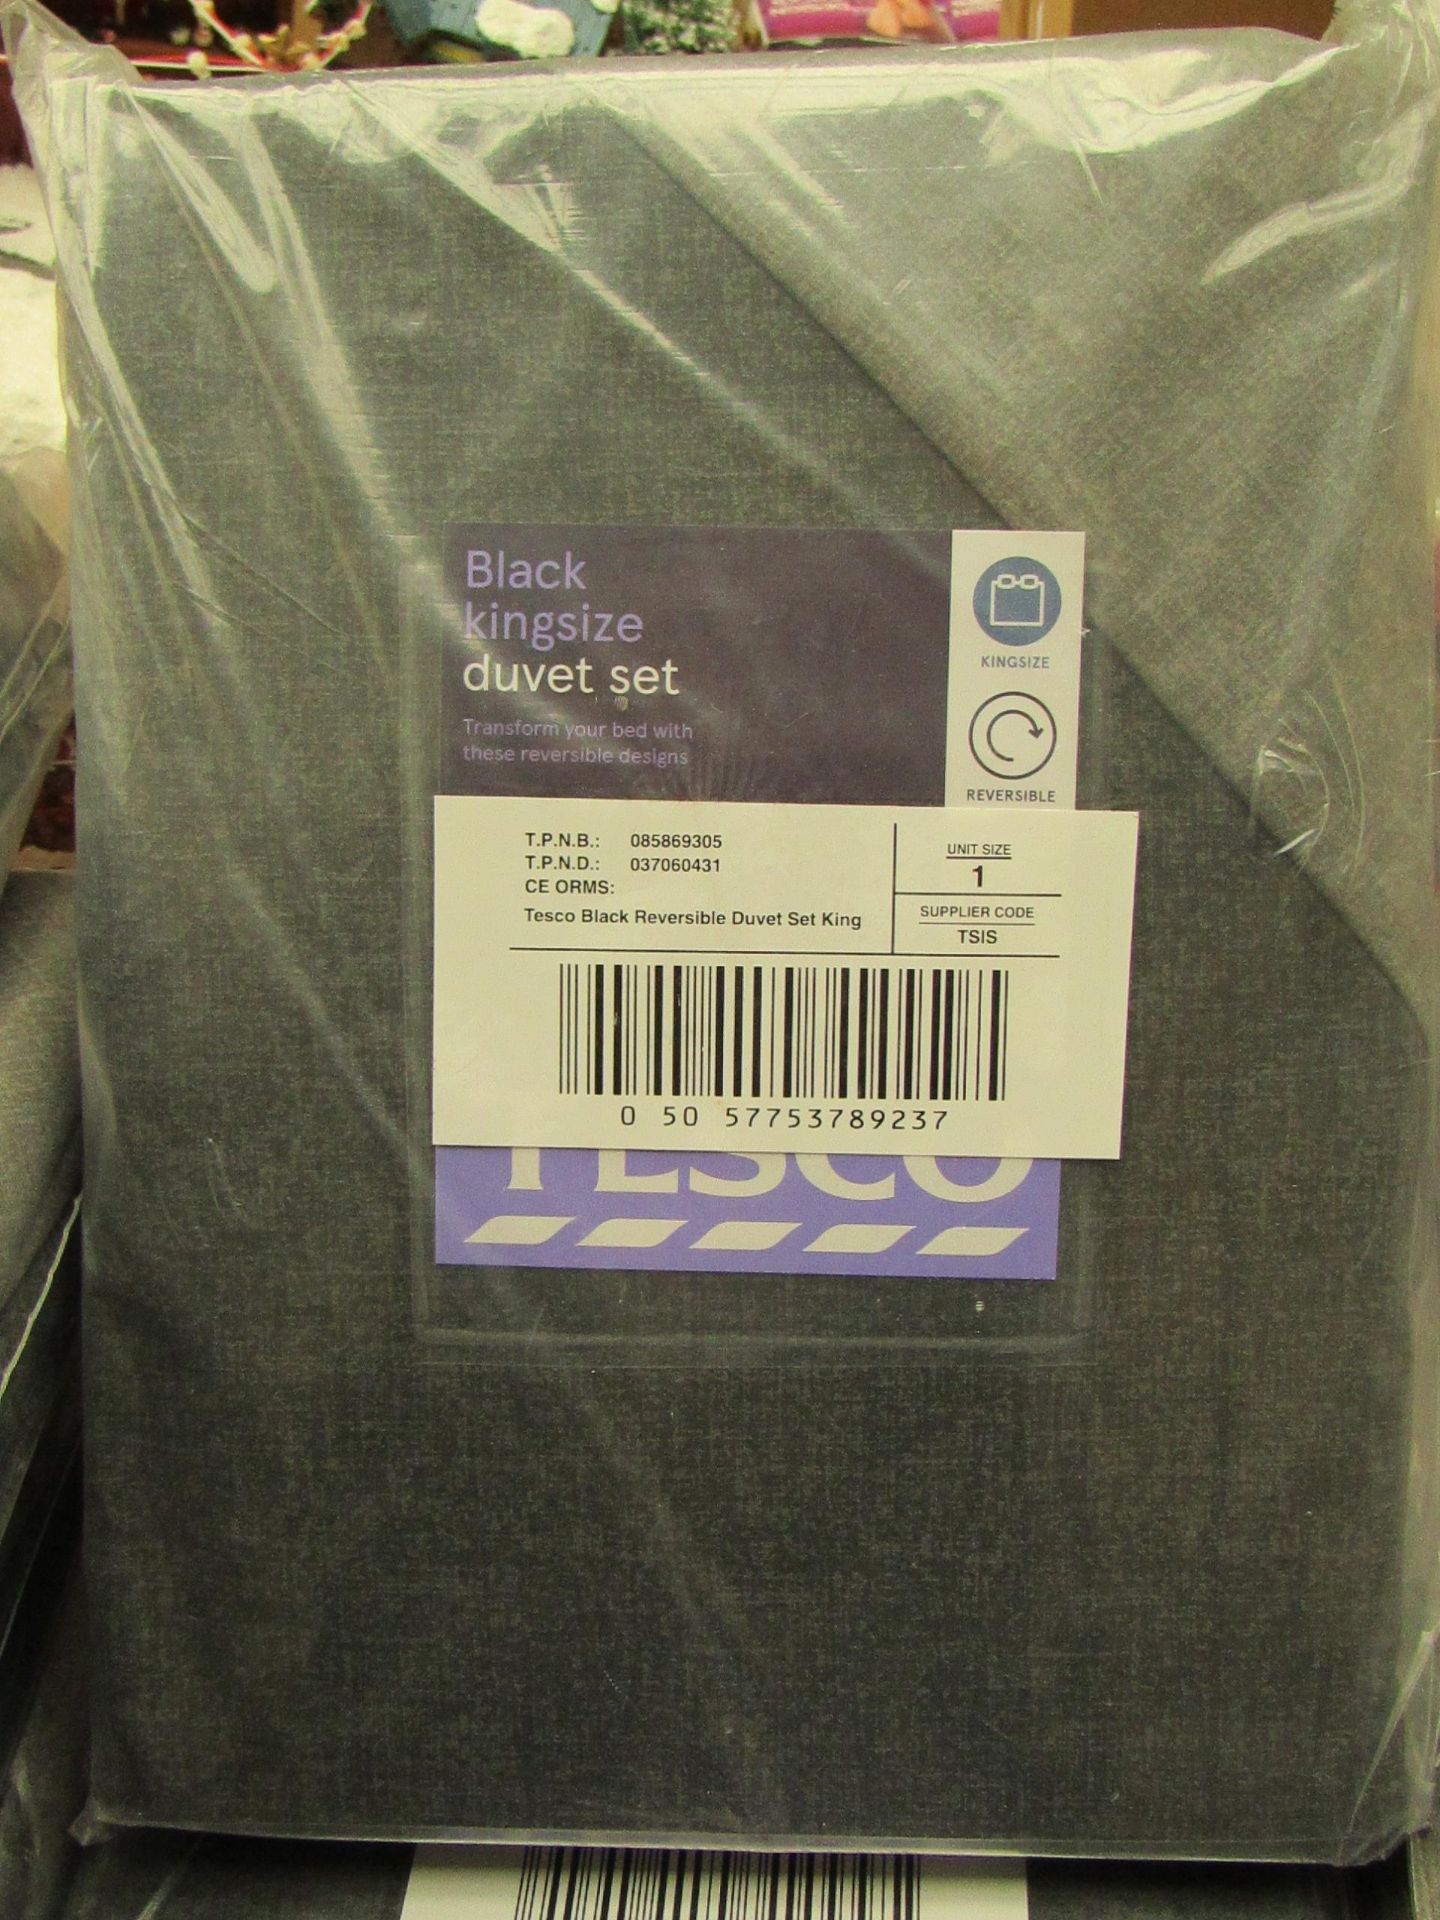 Tesco black double duvet set, size kingsize, new and packaged.